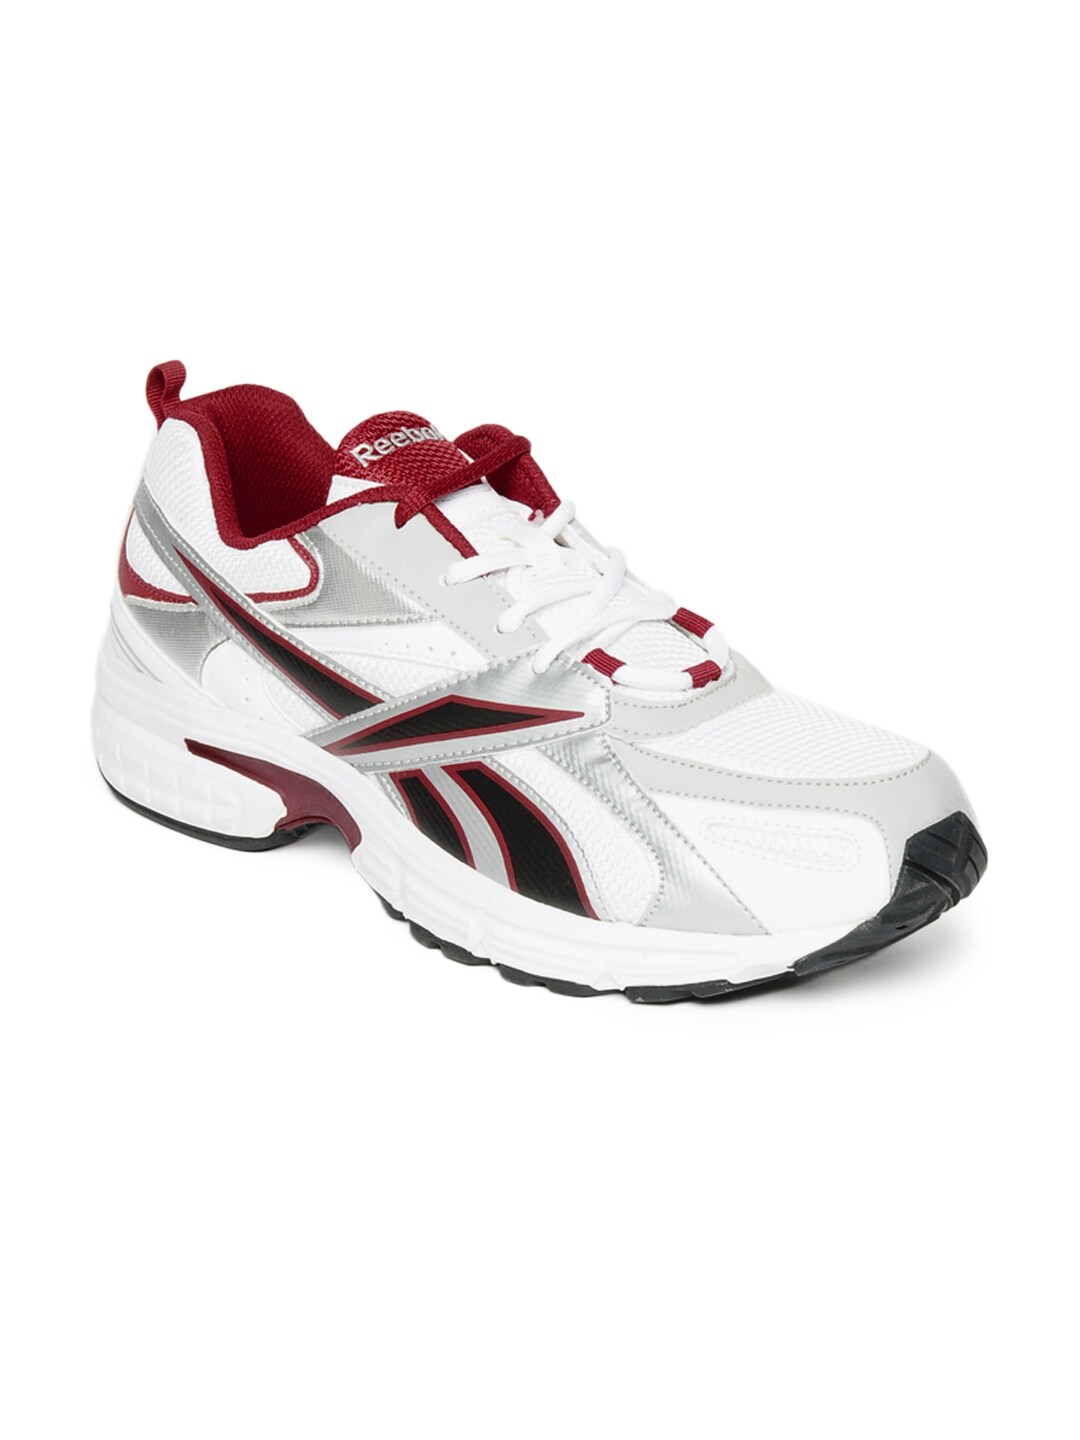 Reebok Men White Acciomax III Sports Shoes